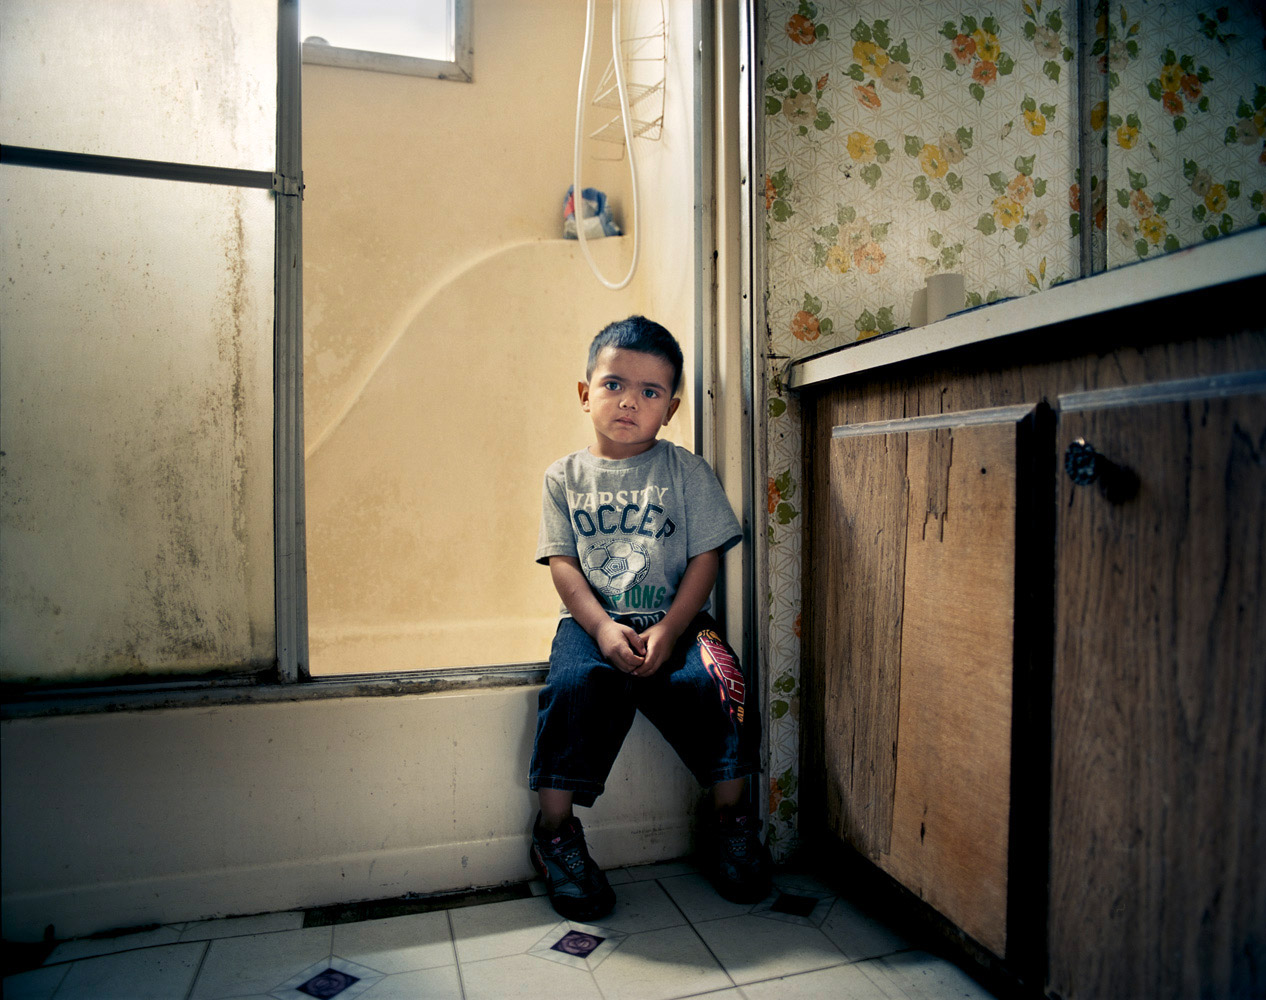 generational poverty photo essay